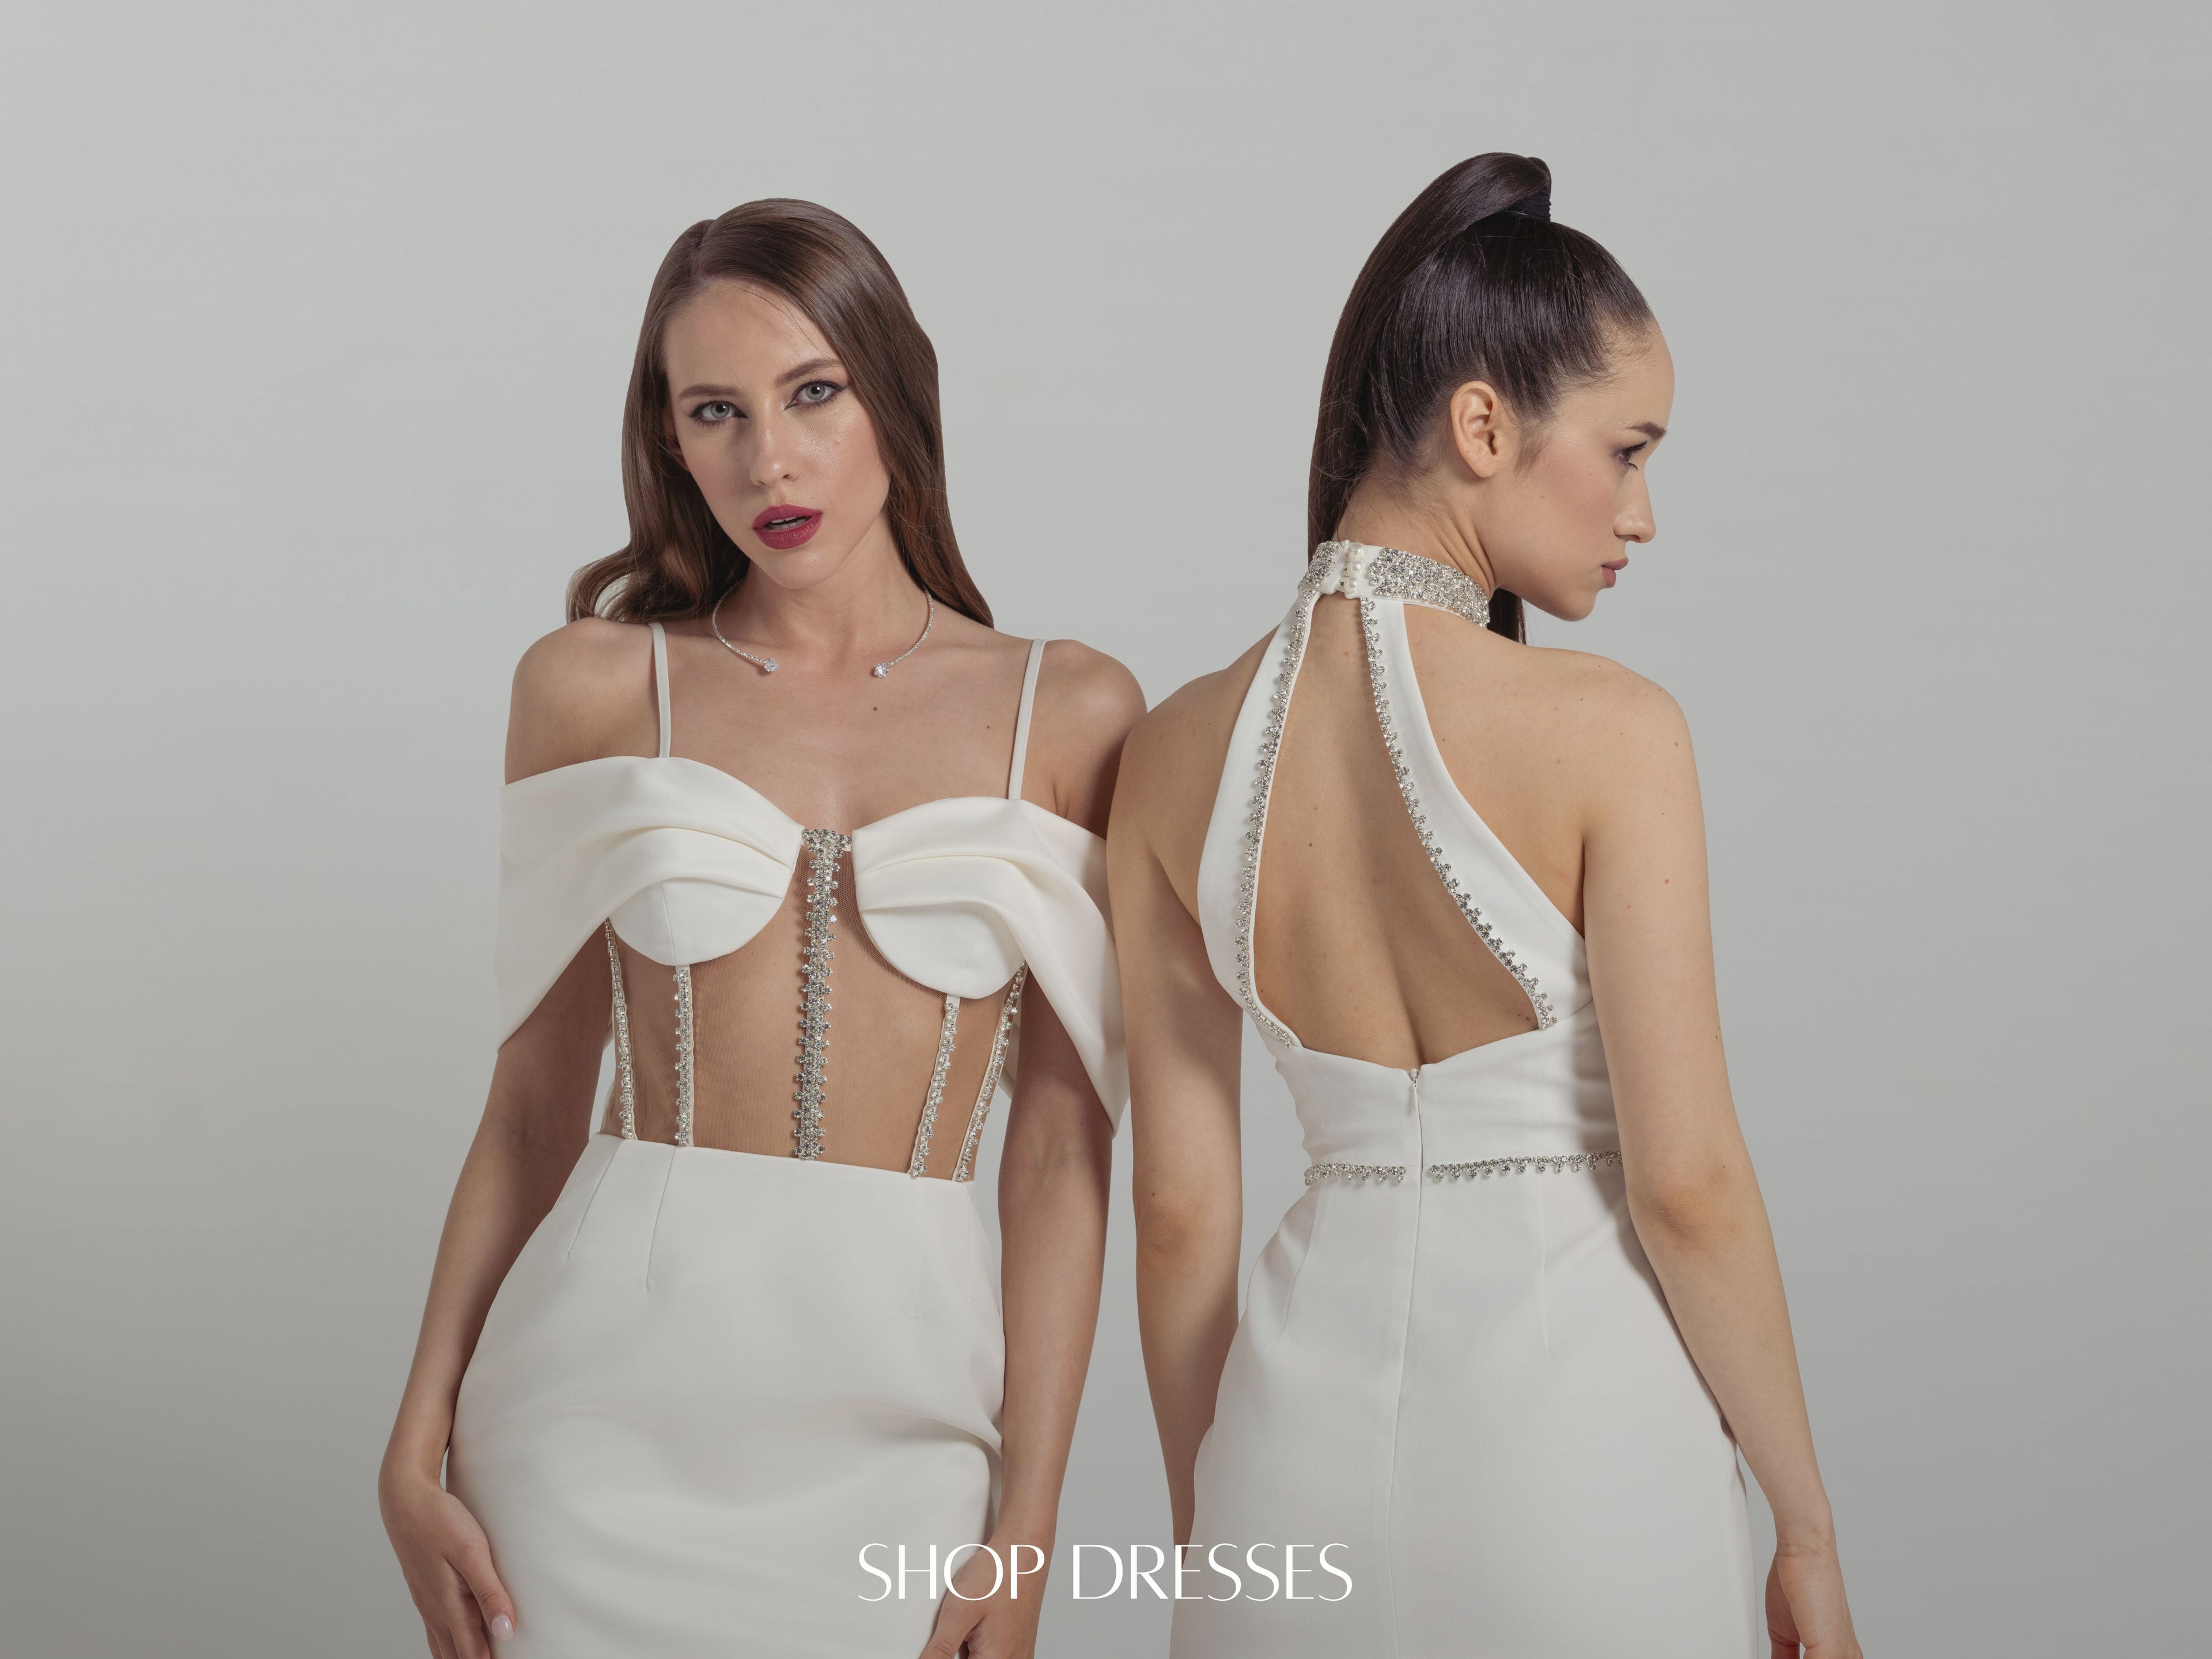 Shop All Dresses by Tia Dorraine Women's Luxury Fashion Designer Clothing Brand